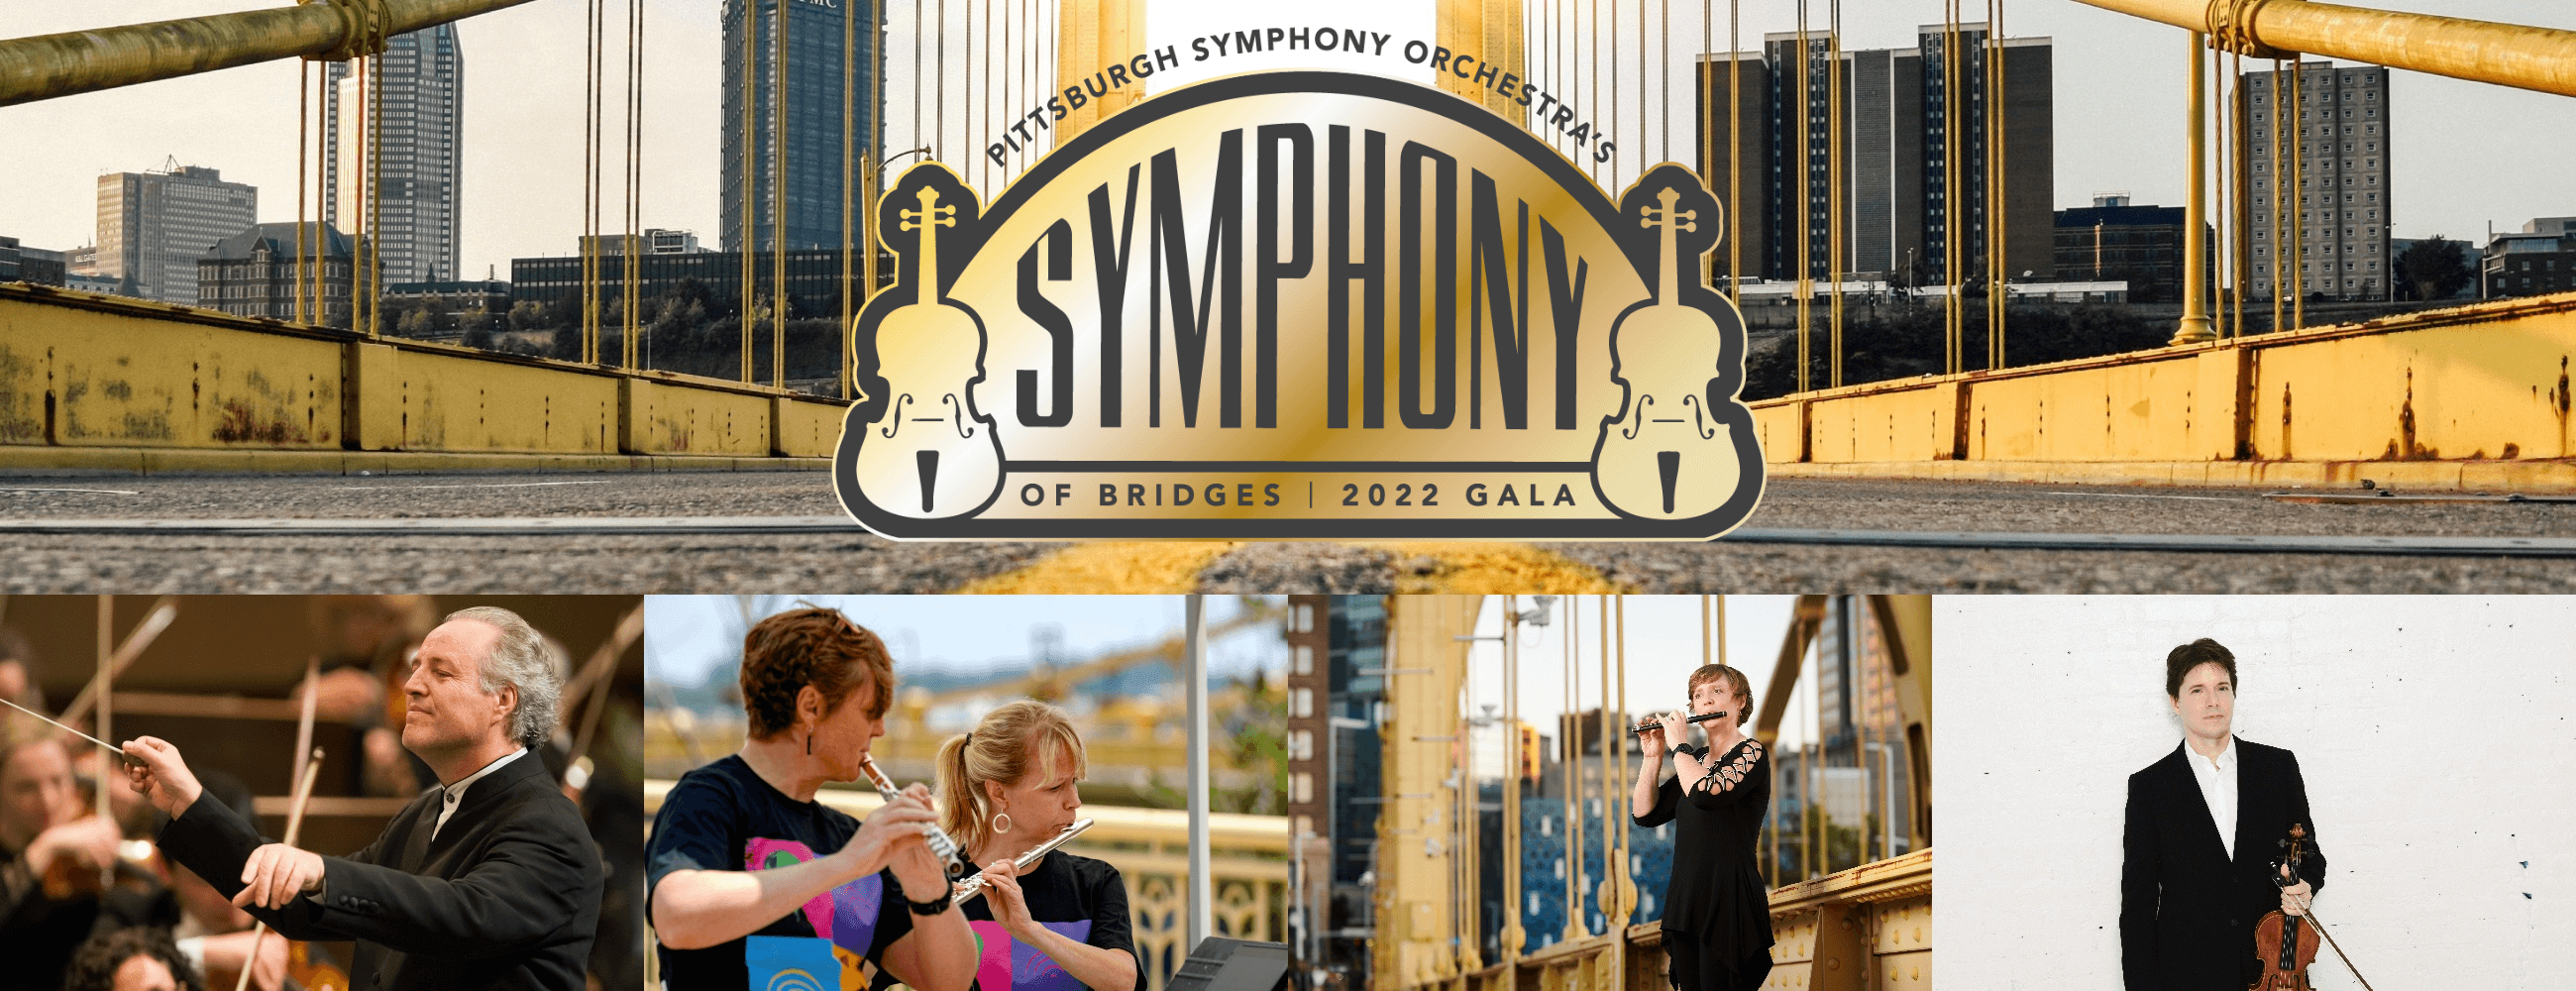 Symphony of Bridges Gala Concert Pittsburgh Official Ticket Source Heinz Hall Sat, Sep